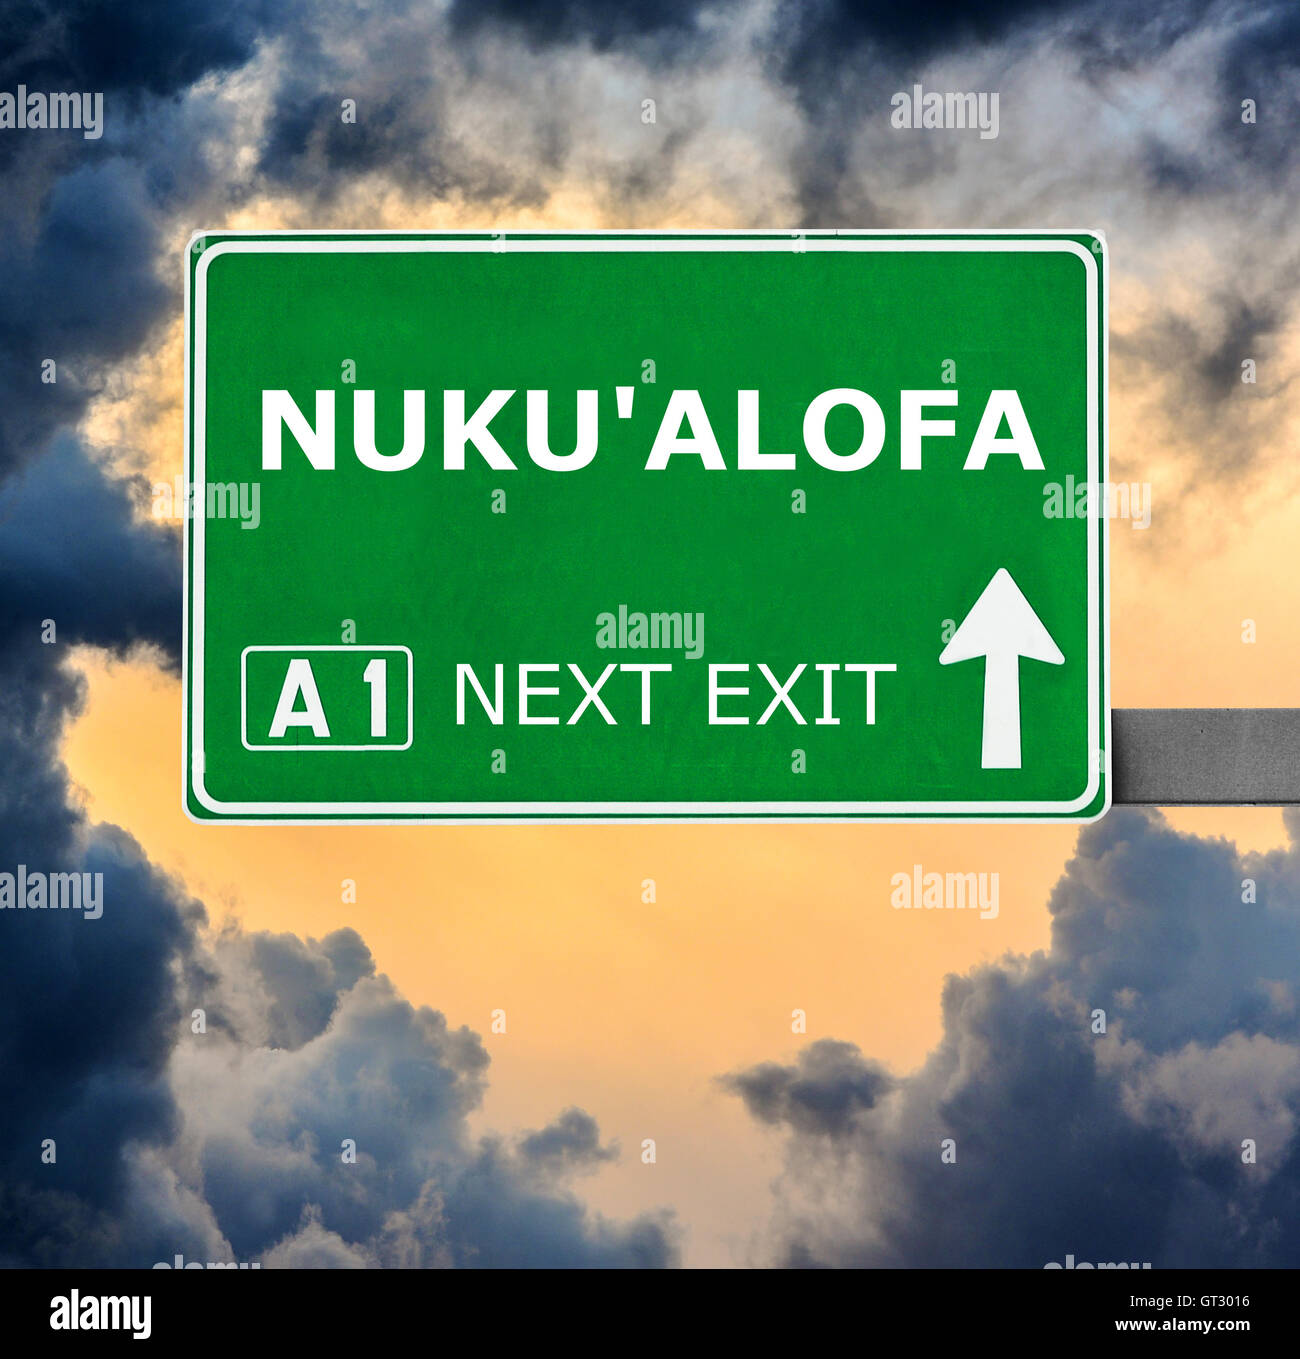 NUKU'ALOFA road sign against clear blue sky Banque D'Images